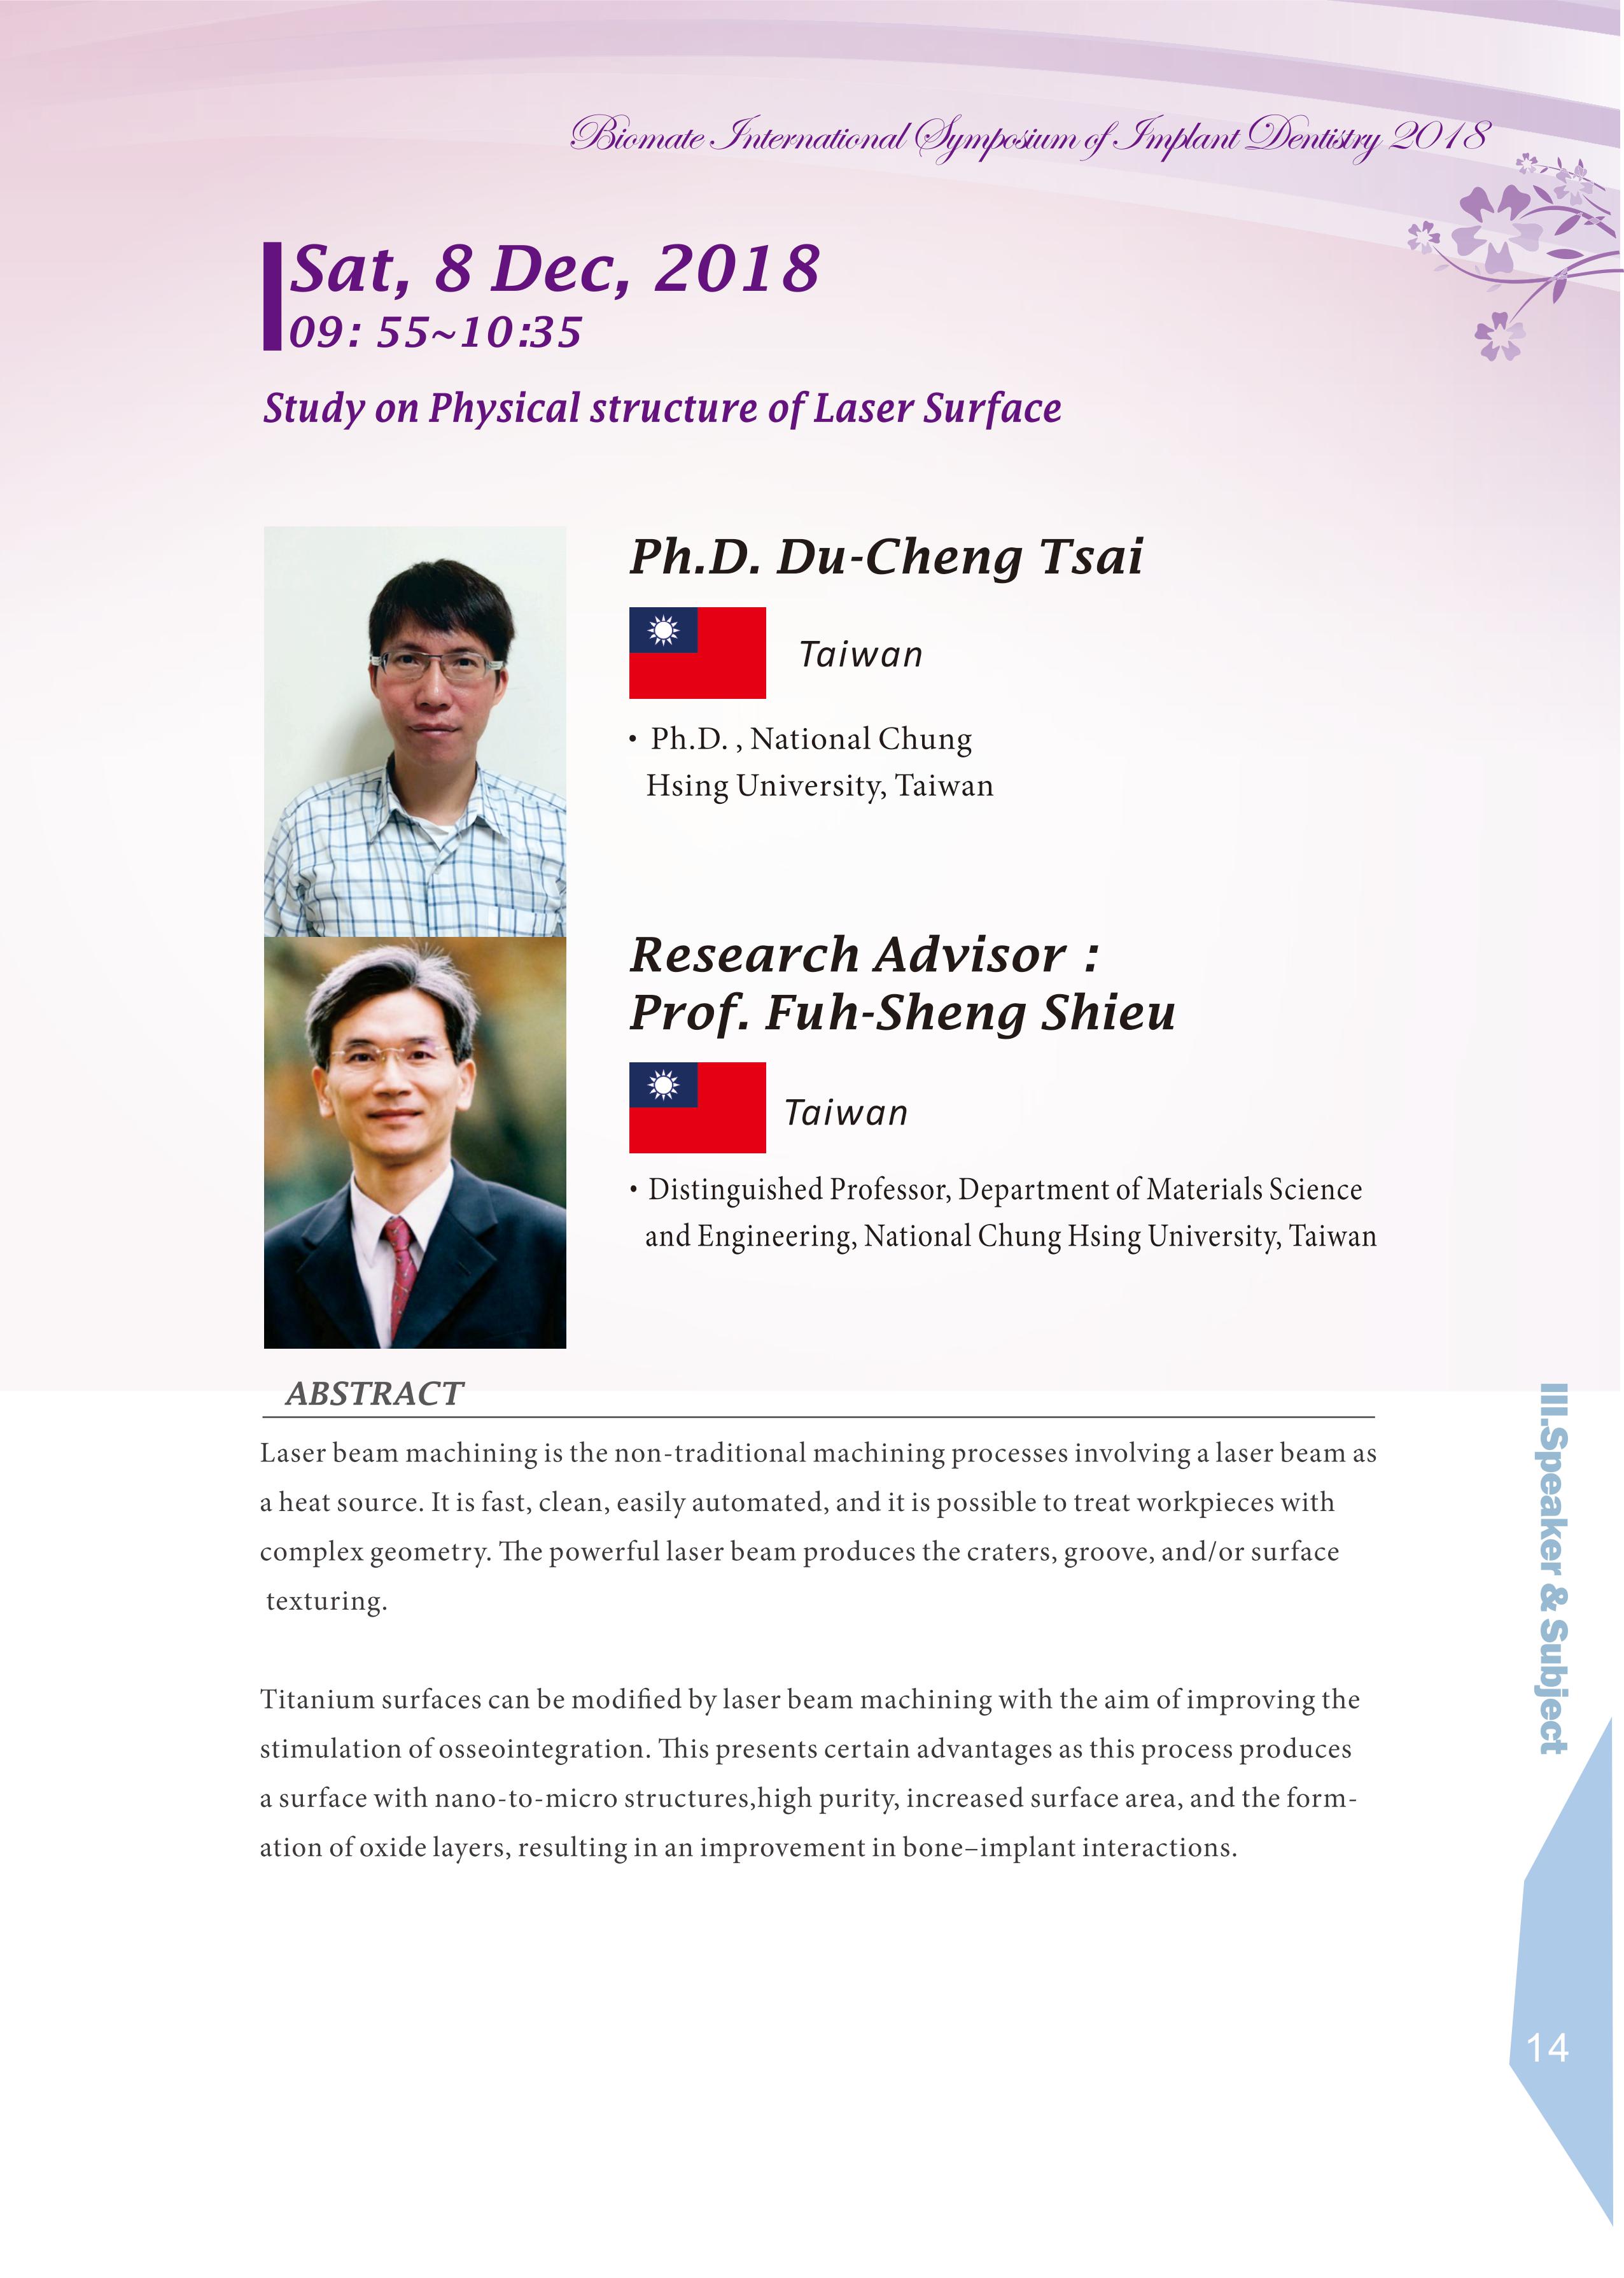 Biomate Internation Symposium of Implant Dentistry-Ph.D.Du-Cheng Tsai